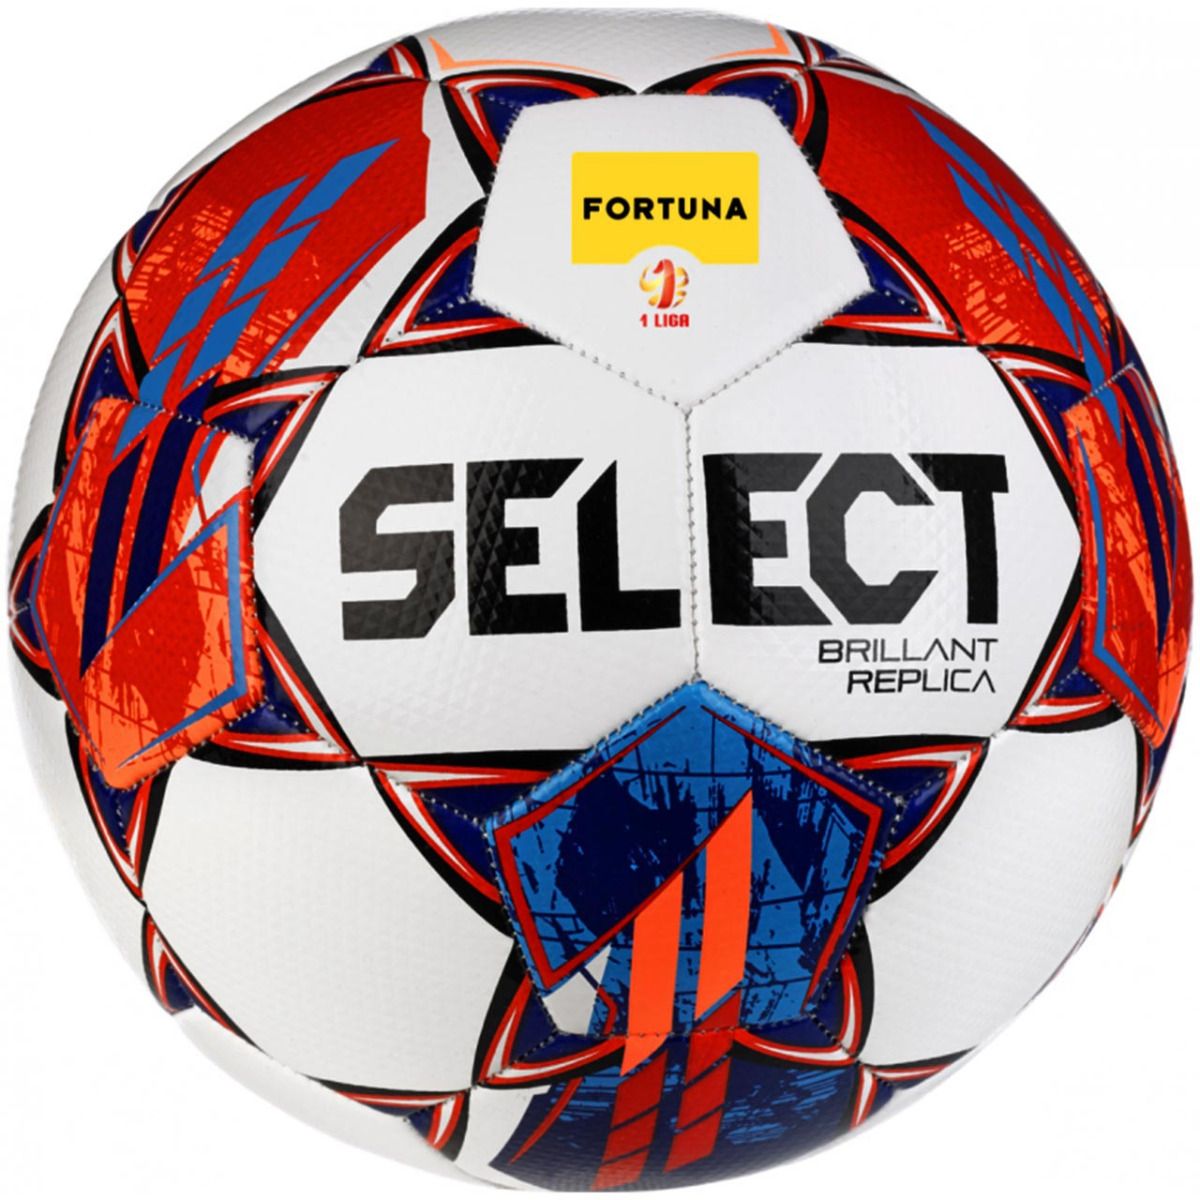 Select Fußball Brillant Replica v23 Fortuna 1 Liga 18183